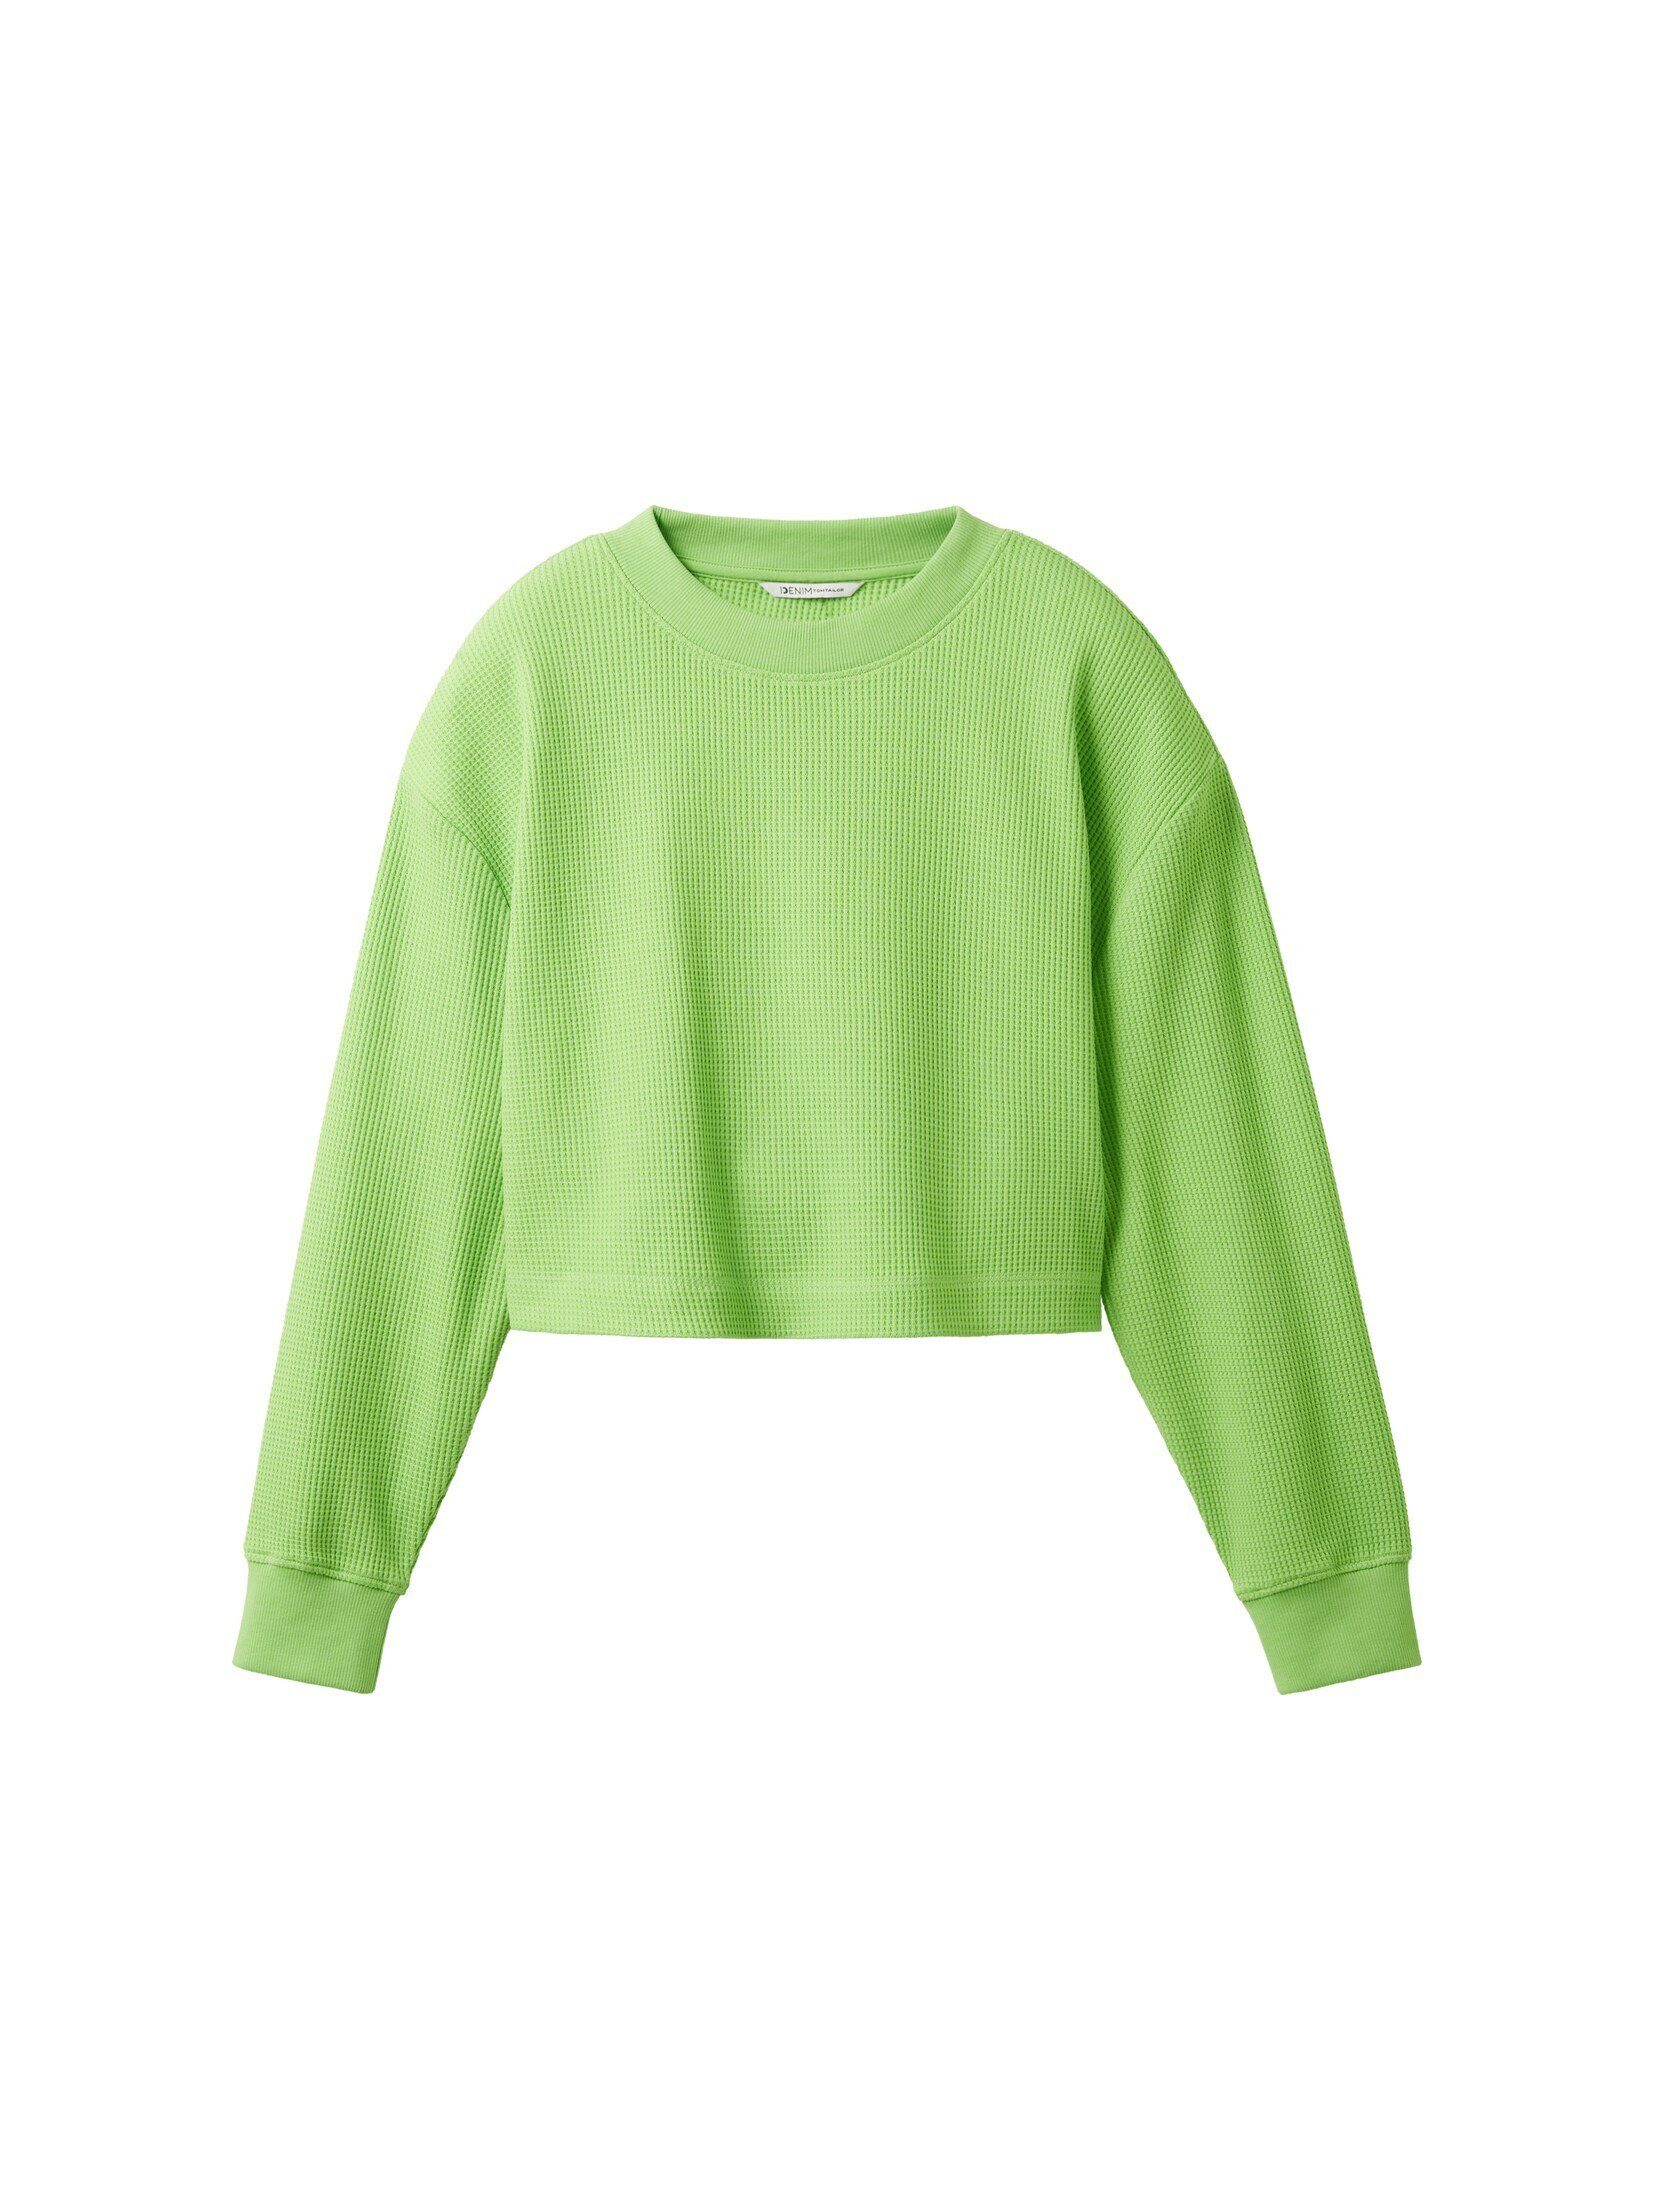 Sweatshirt Denim Sweatshirt green TAILOR TOM lime liquid Cropped